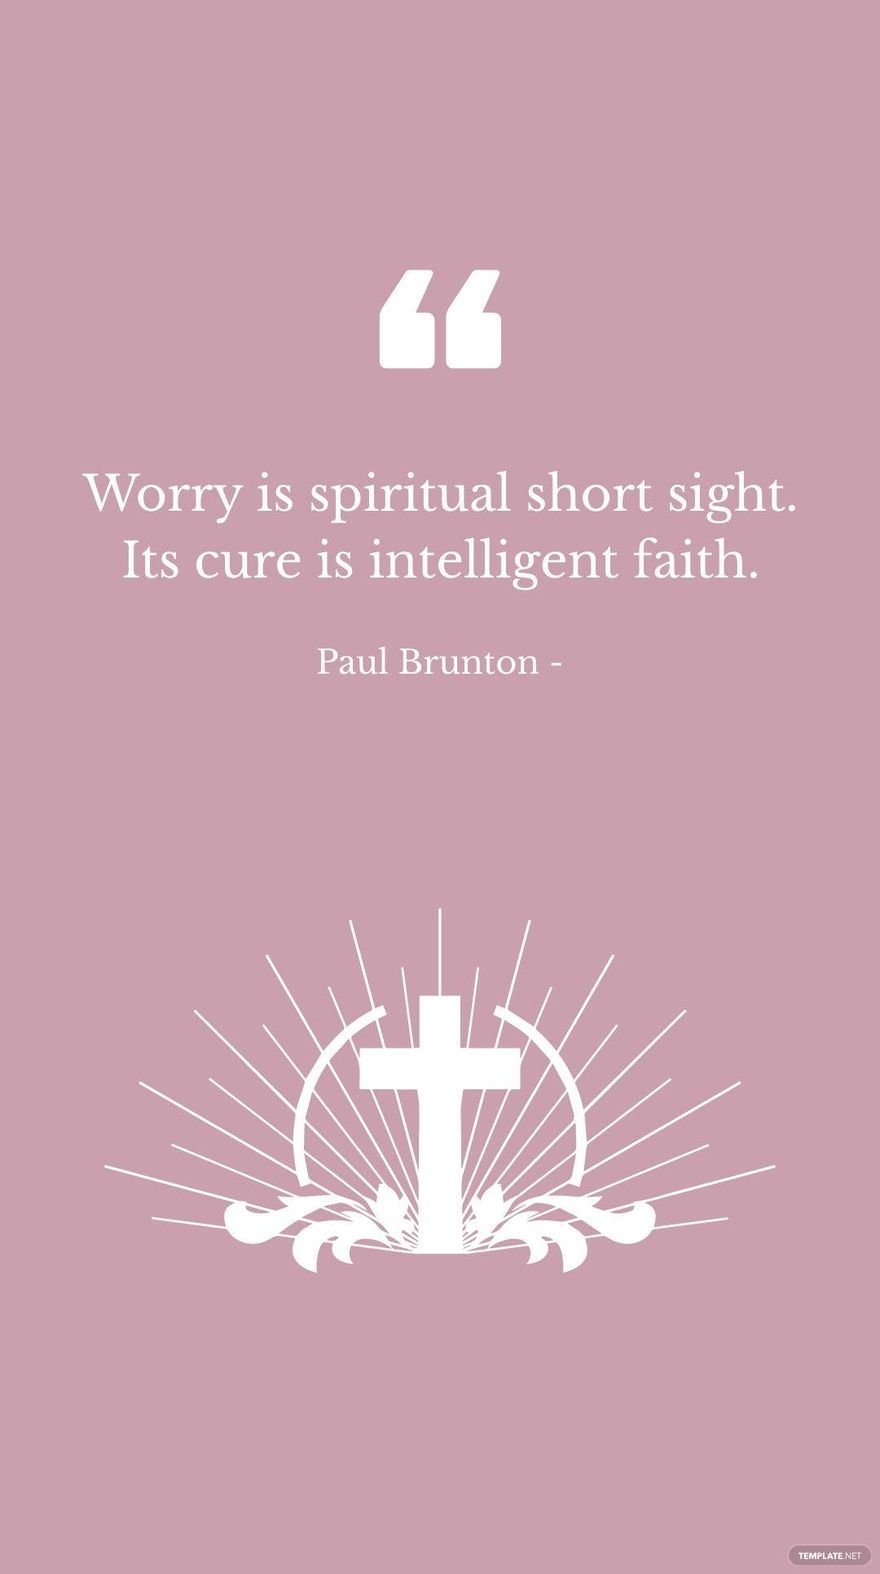 Free Paul Brunton - Worry is spiritual short sight. Its cure is intelligent faith. in JPG